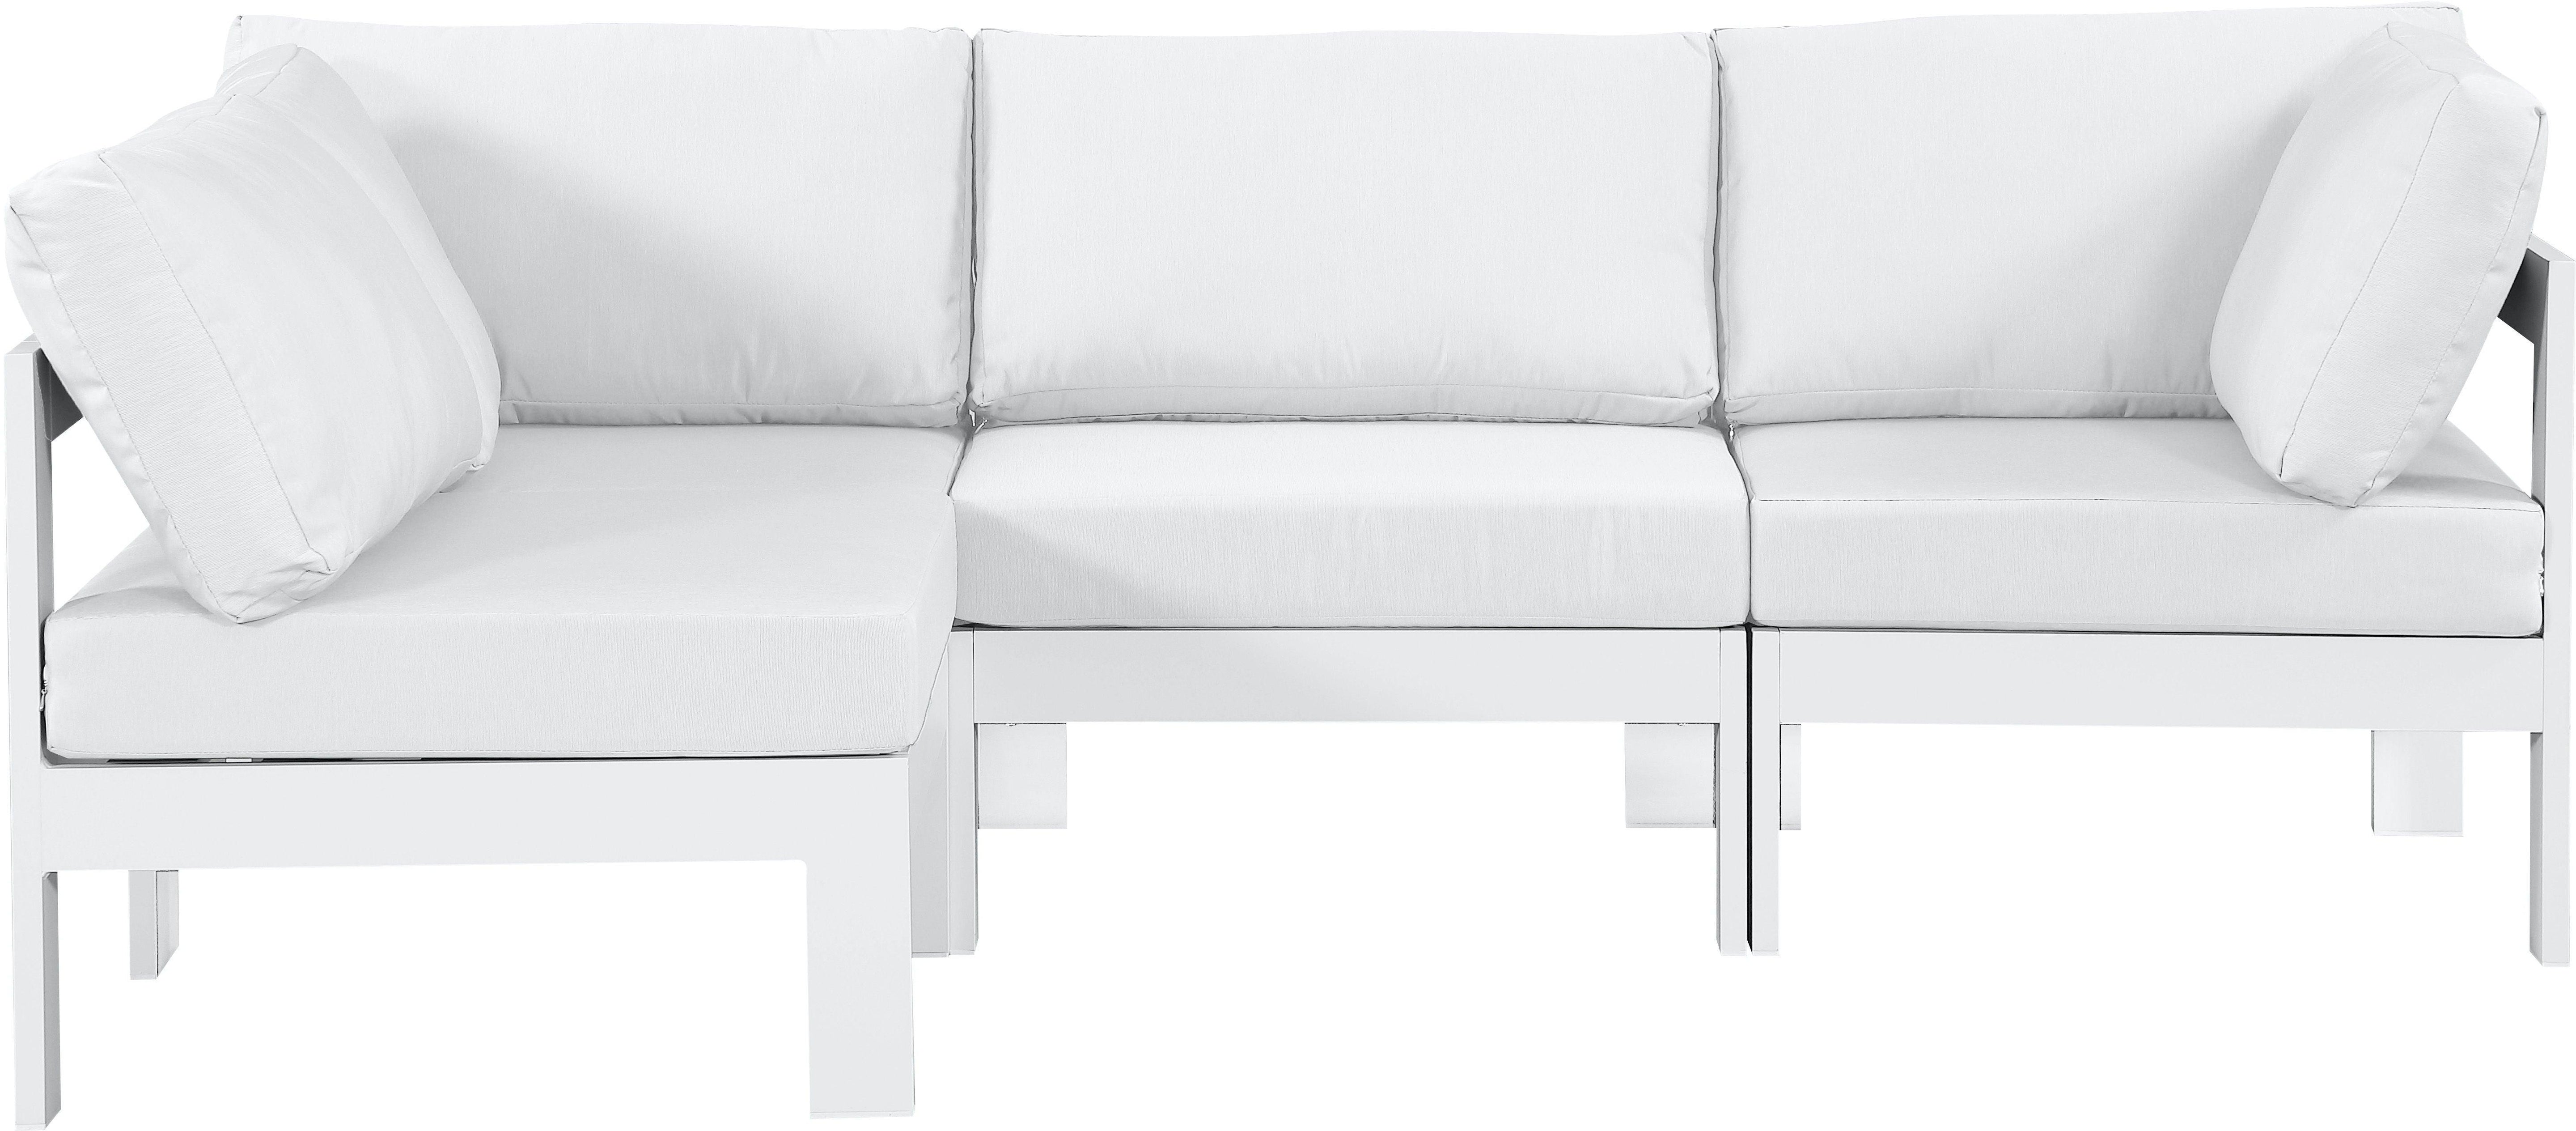 Meridian Furniture - Nizuc - Outdoor Patio Modular Sectional 4 Piece - White - 5th Avenue Furniture